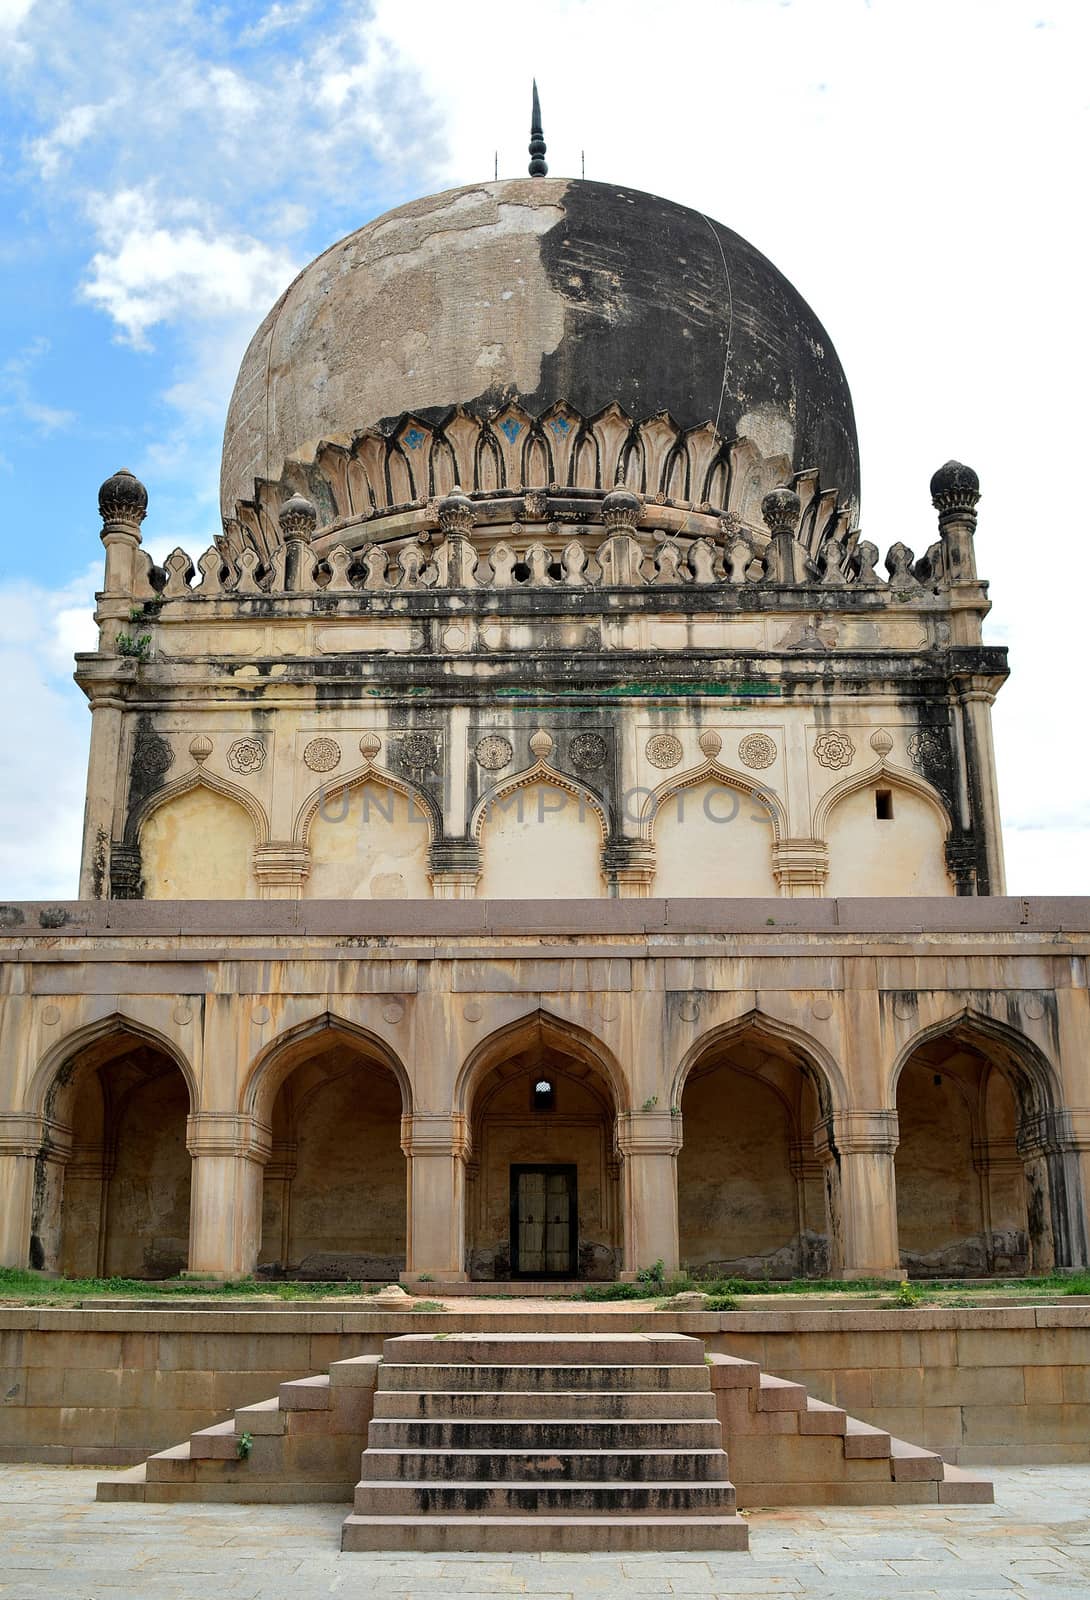 Mausoleum of Qutb Shahi Tombs by rkbalaji